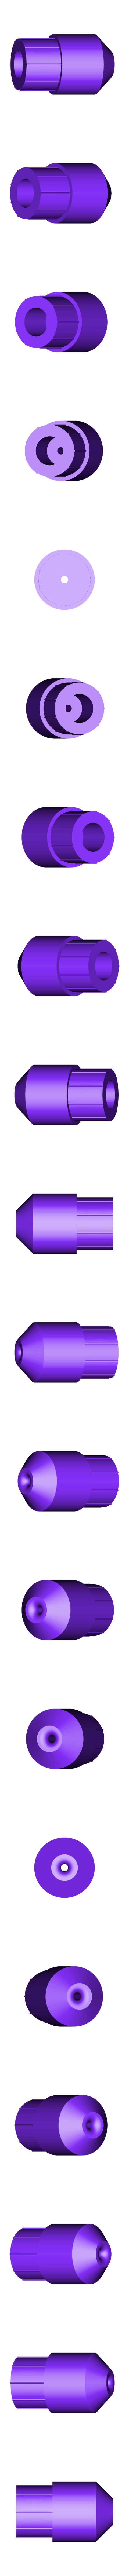 EndCap.stl Download free STL file Probe stick for Si-8b (Си-8б) Geiger Müller tube • 3D printable object, glassy